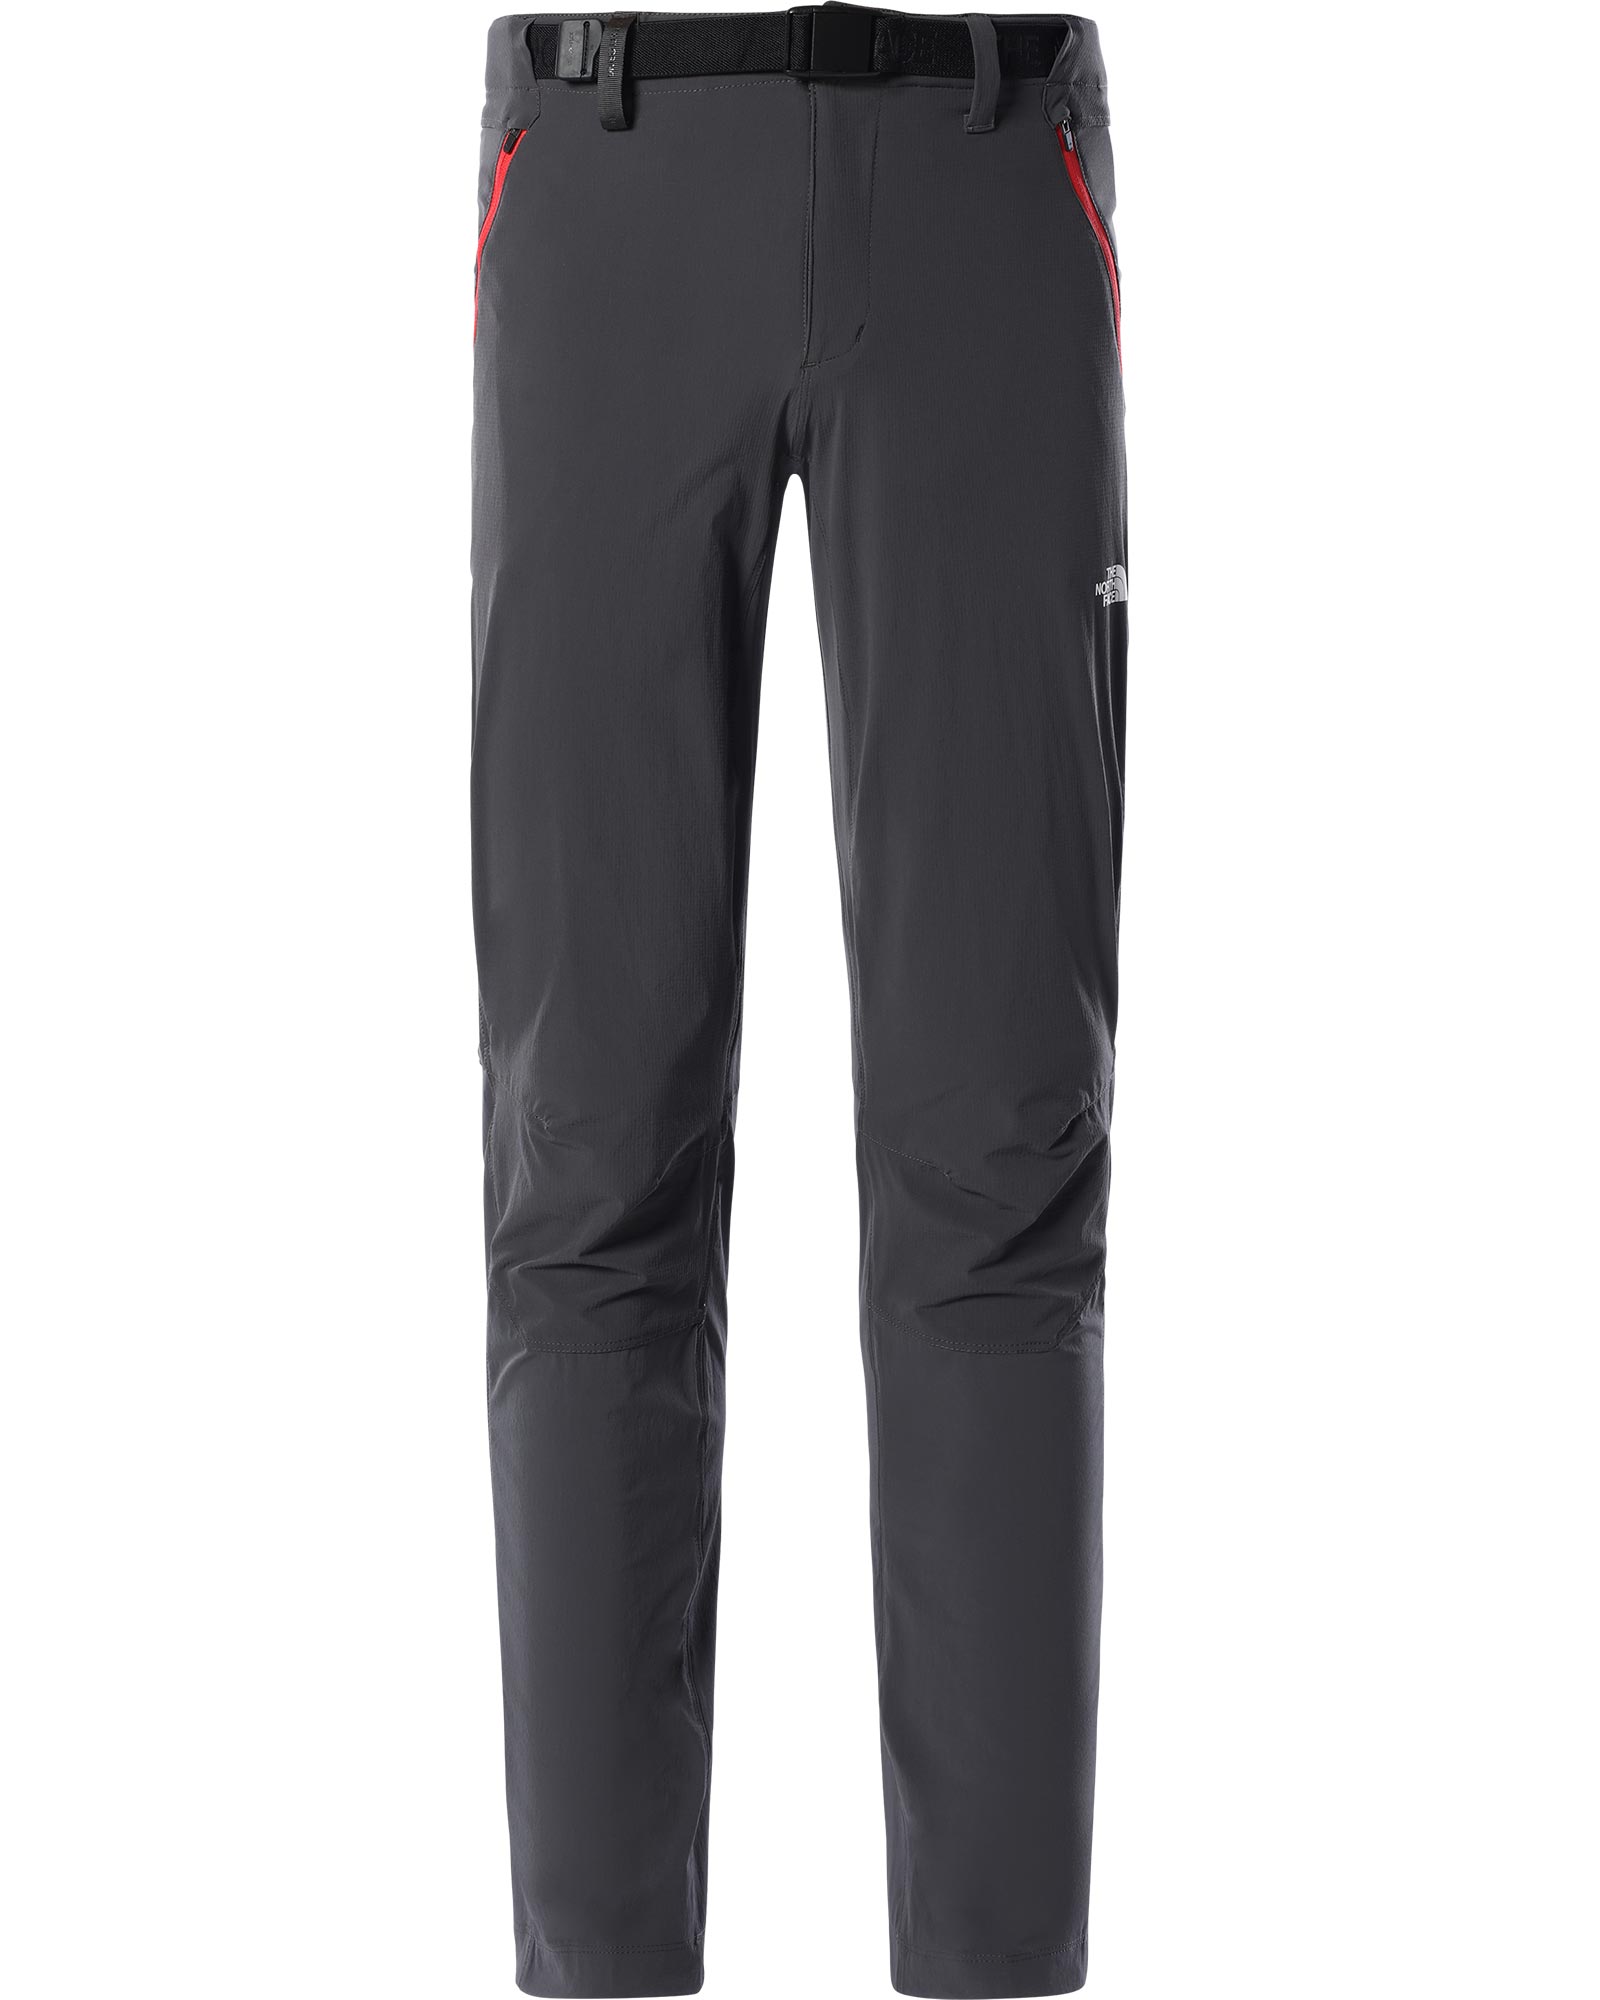 The North Face Speedlight 2 Women’s Pants - Asphalt Grey/Horizon Red 16